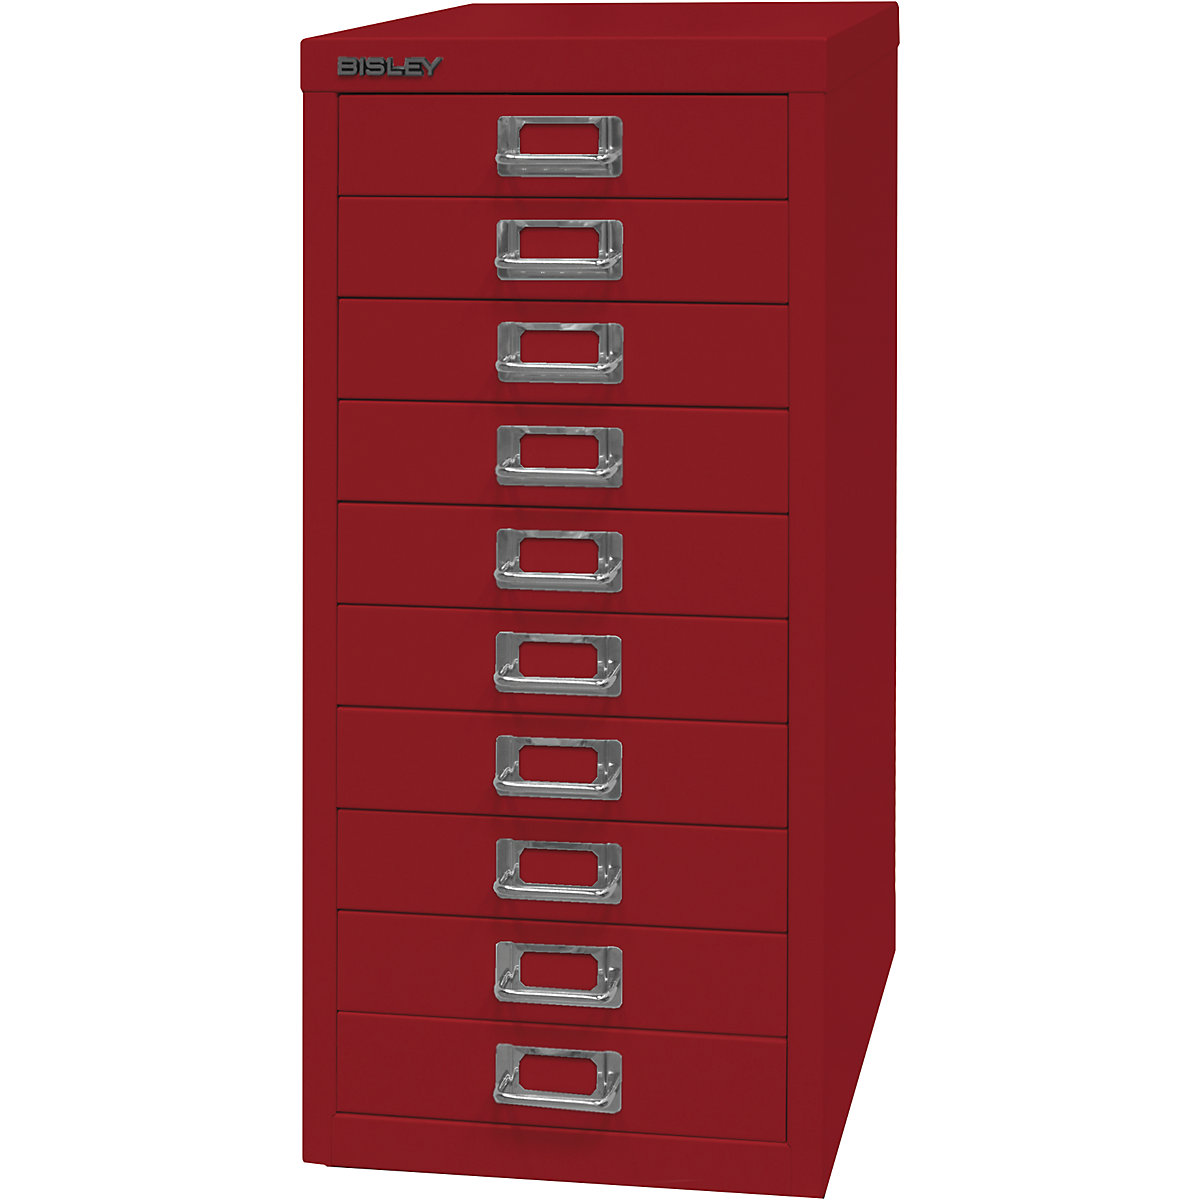 MultiDrawer™ 29 series – BISLEY, A4, 10 drawers, cardinal red-7